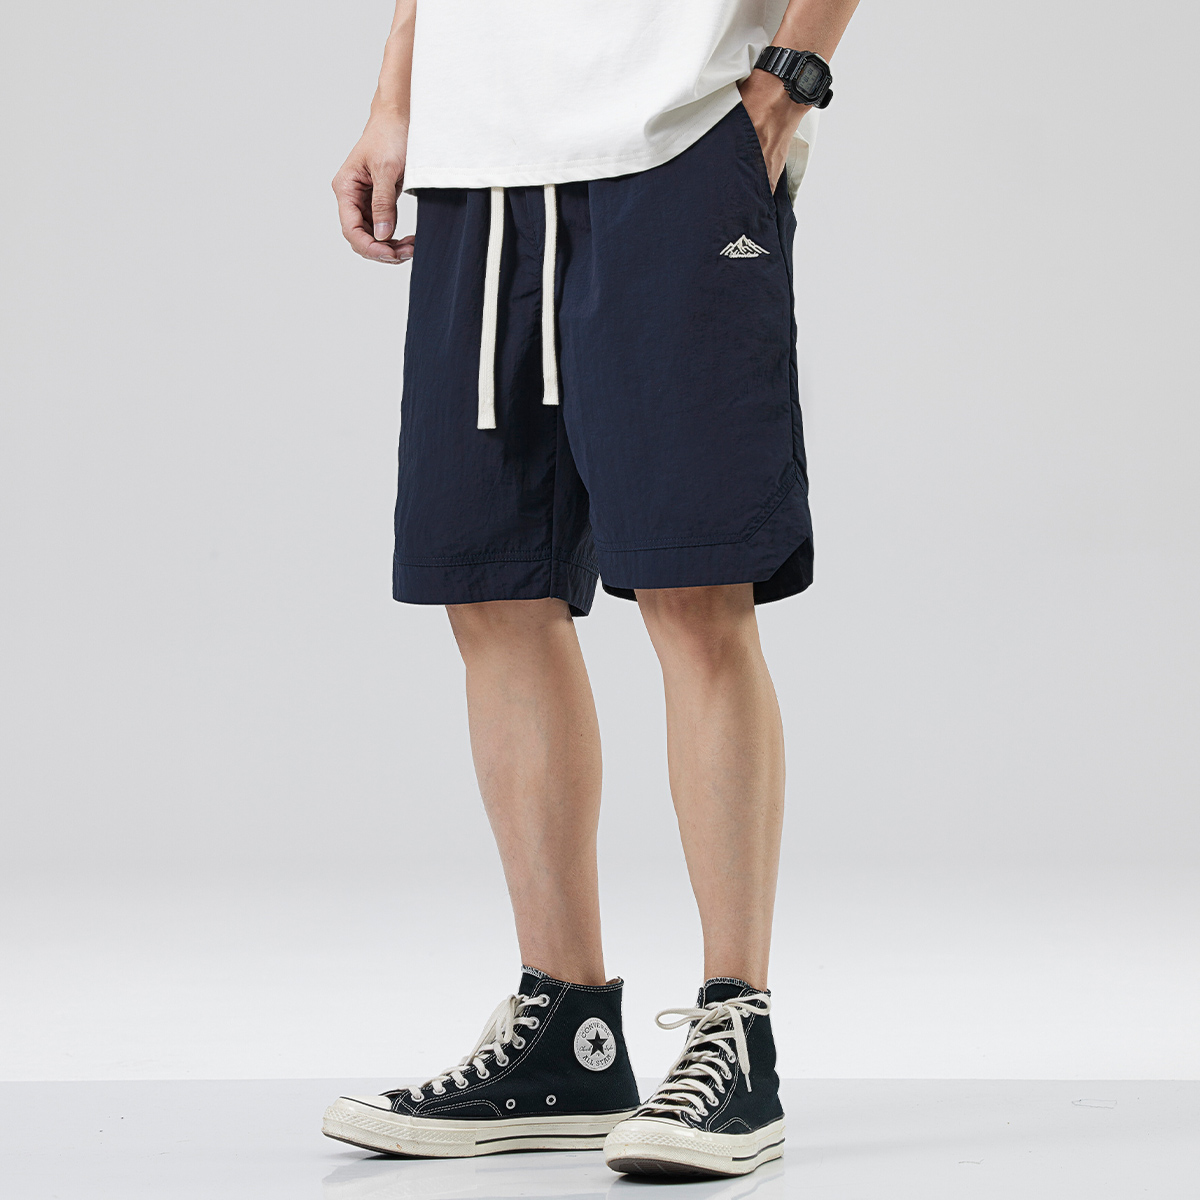 Hansca男士短袖t恤夏季套装穿搭配冰丝短裤日系风男装高端休闲裤